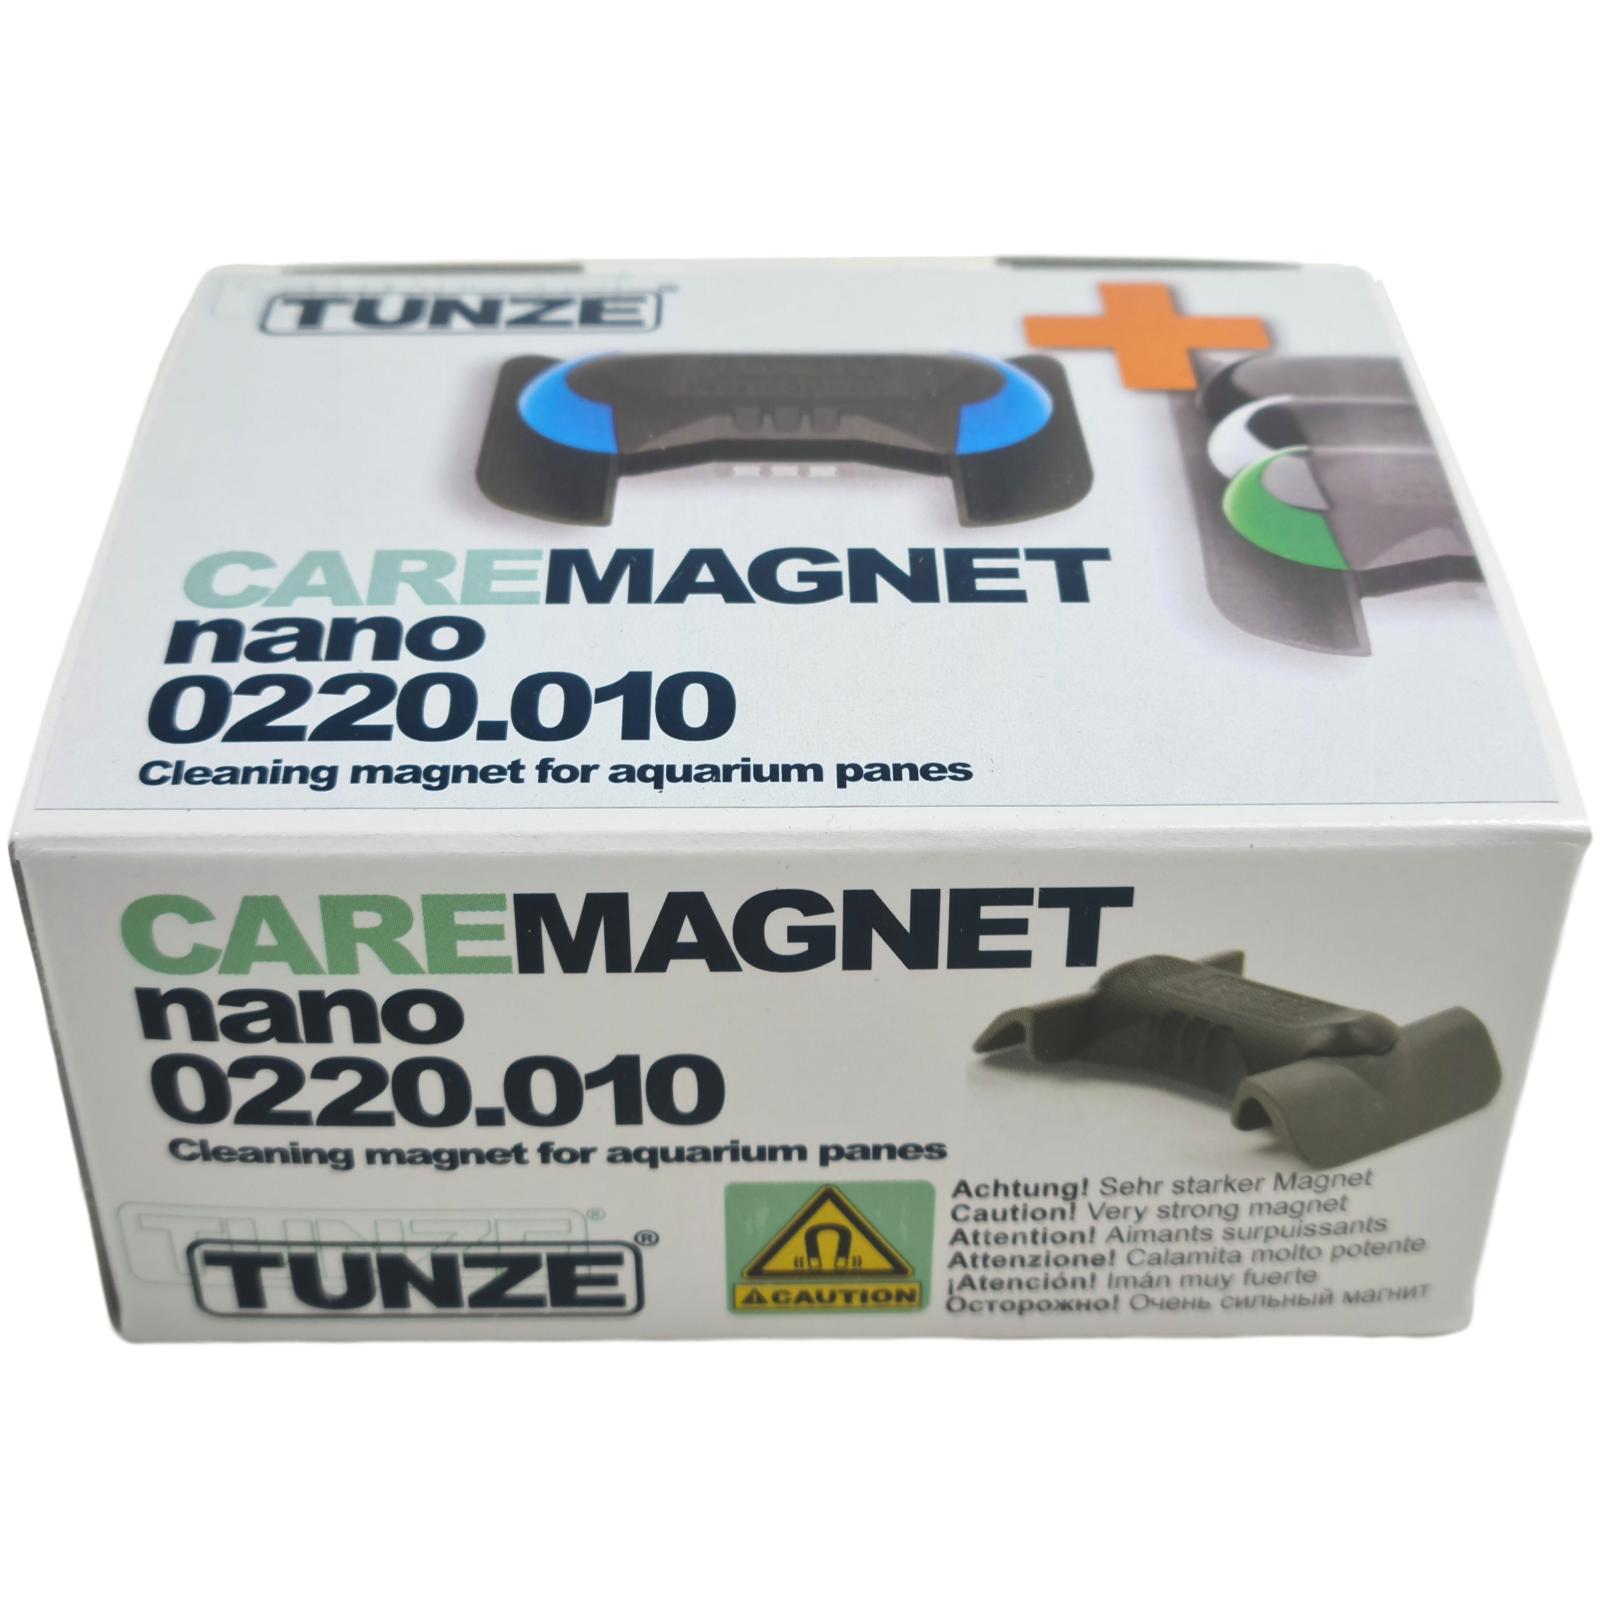 Tunze Care Magnet Scheibenreiniger nano